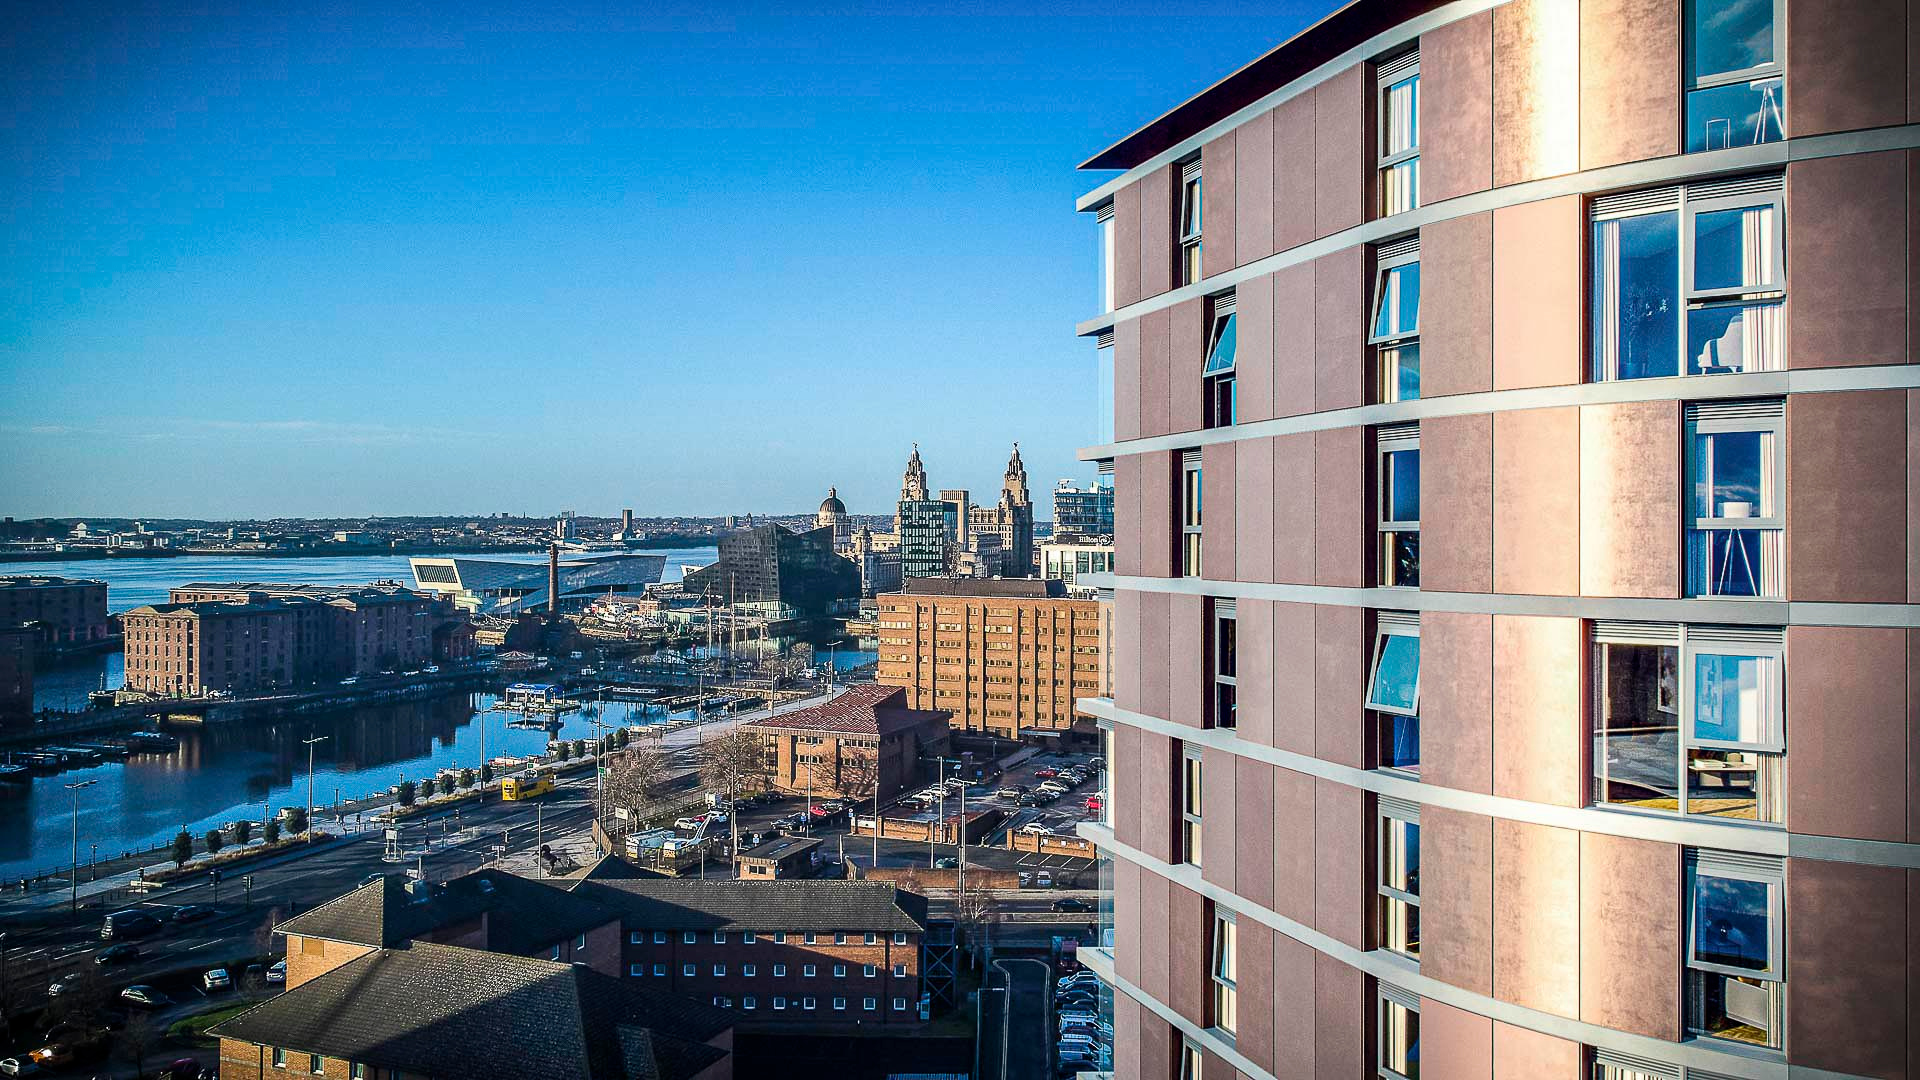 Exterior daytime shot of Maritime View showcasing Liverpool's skyline